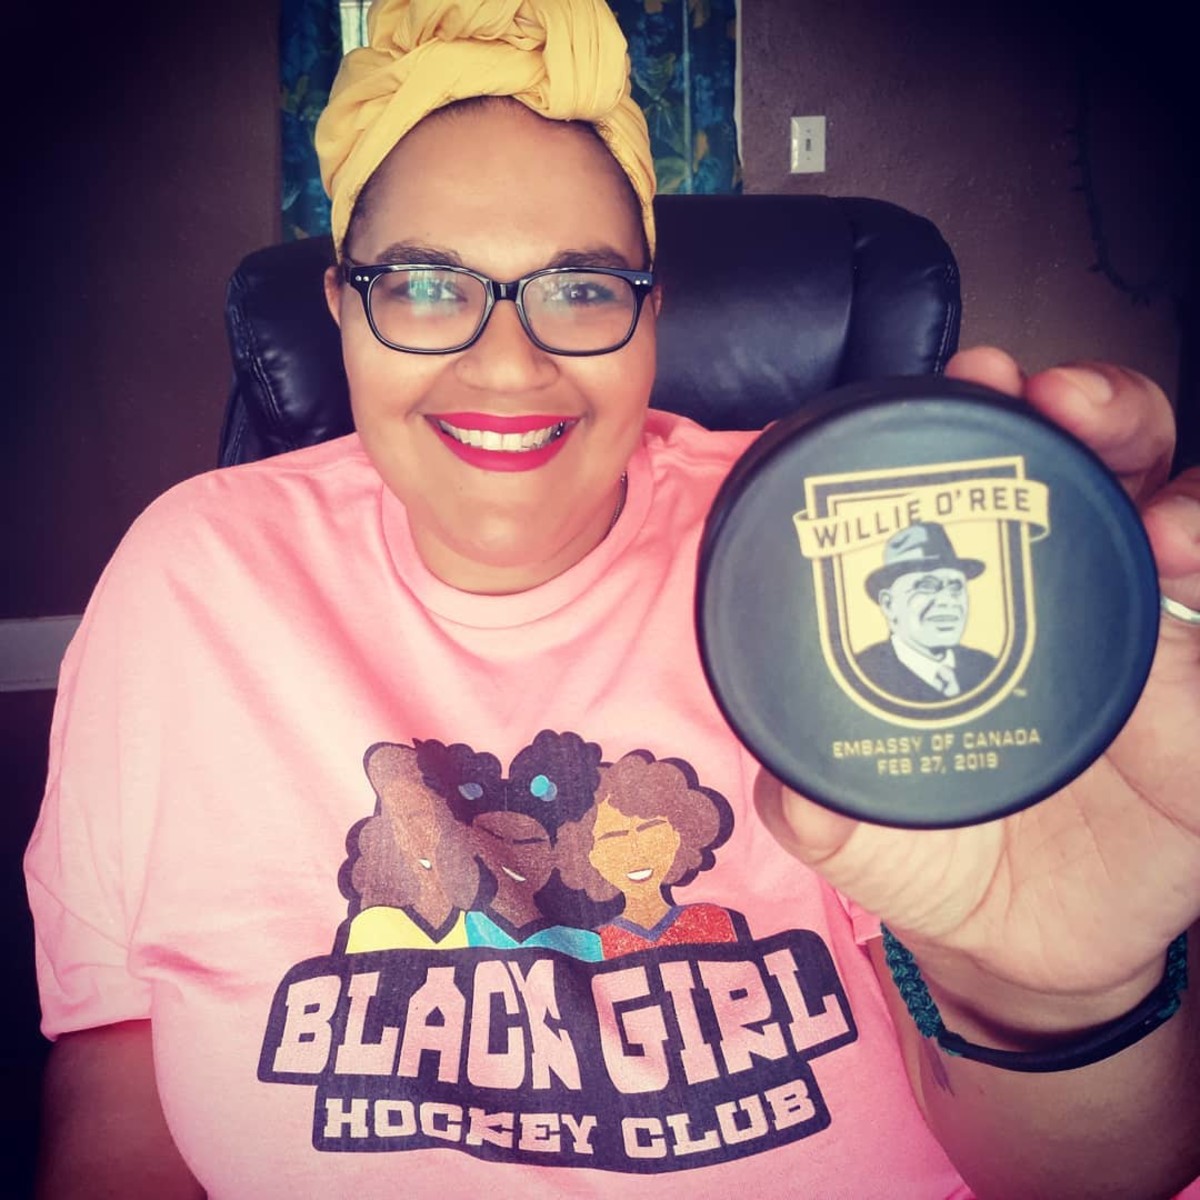 Black Girl Hockey Club, Colorado Avalanche partner in campaign to